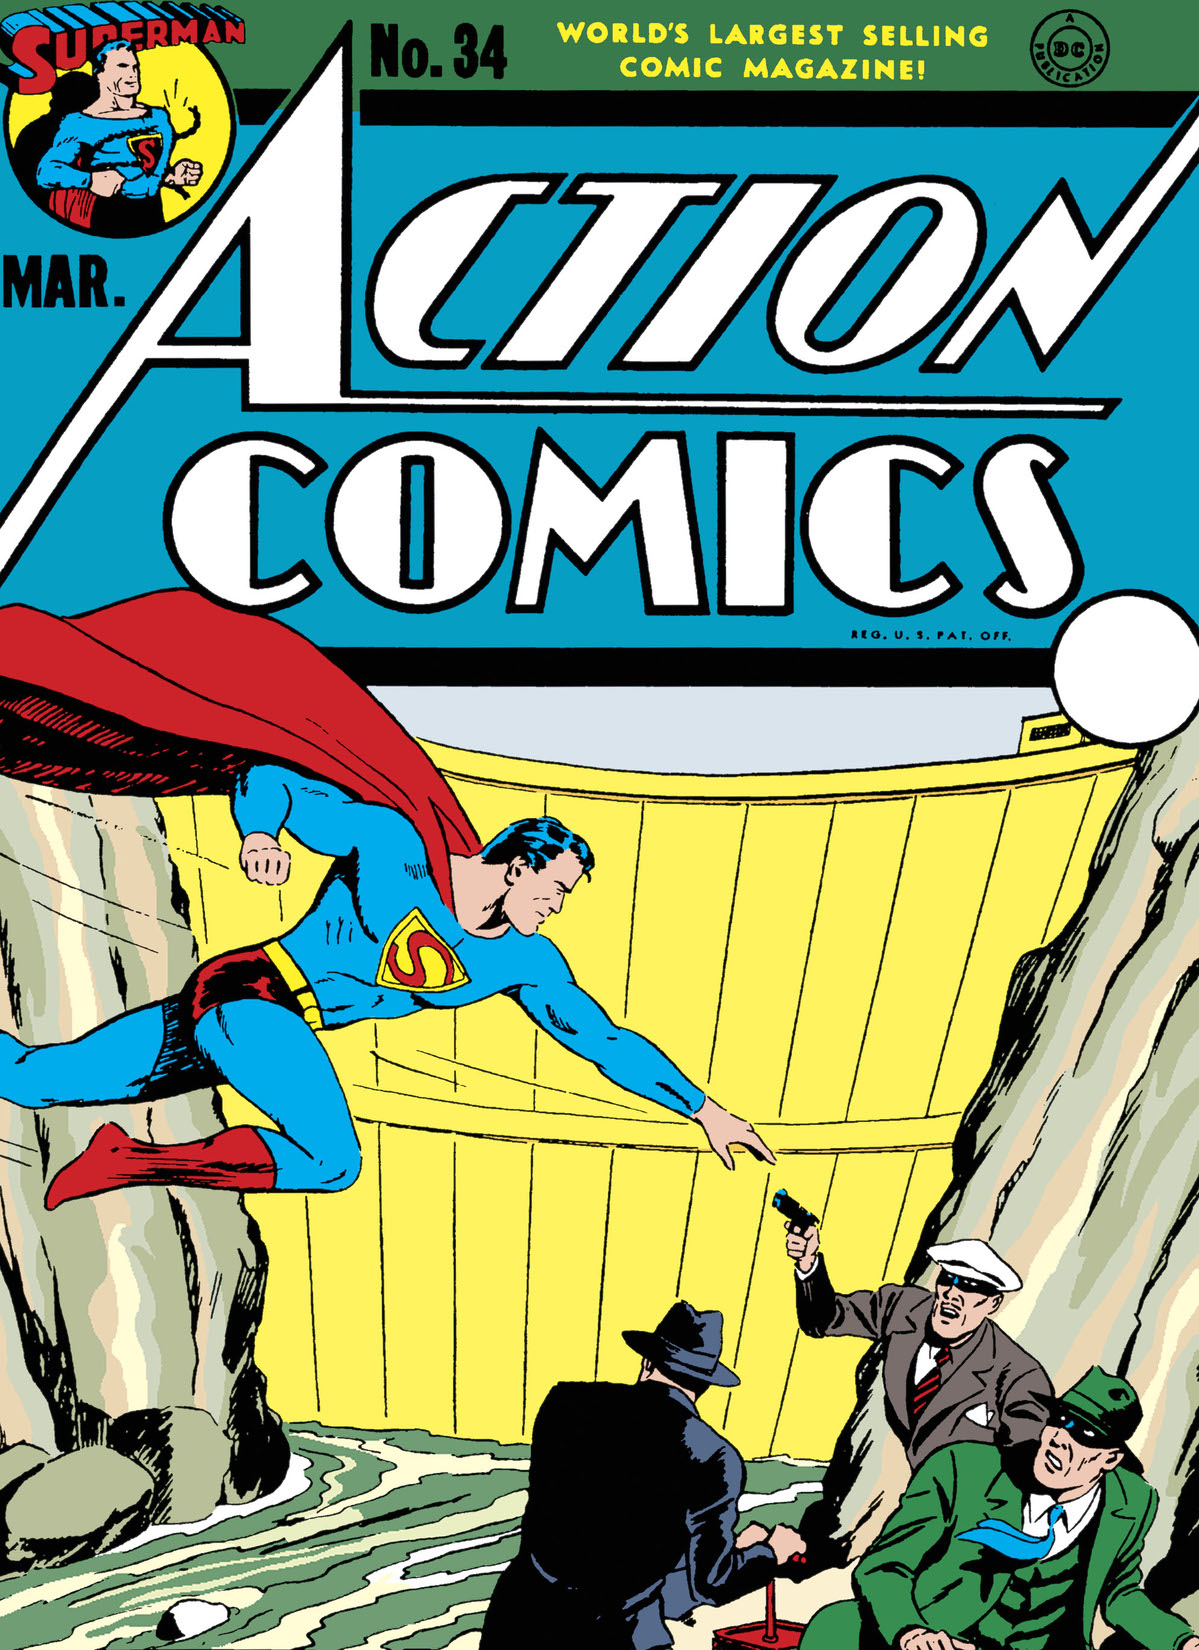 Action Comics (1938-) #34 preview images